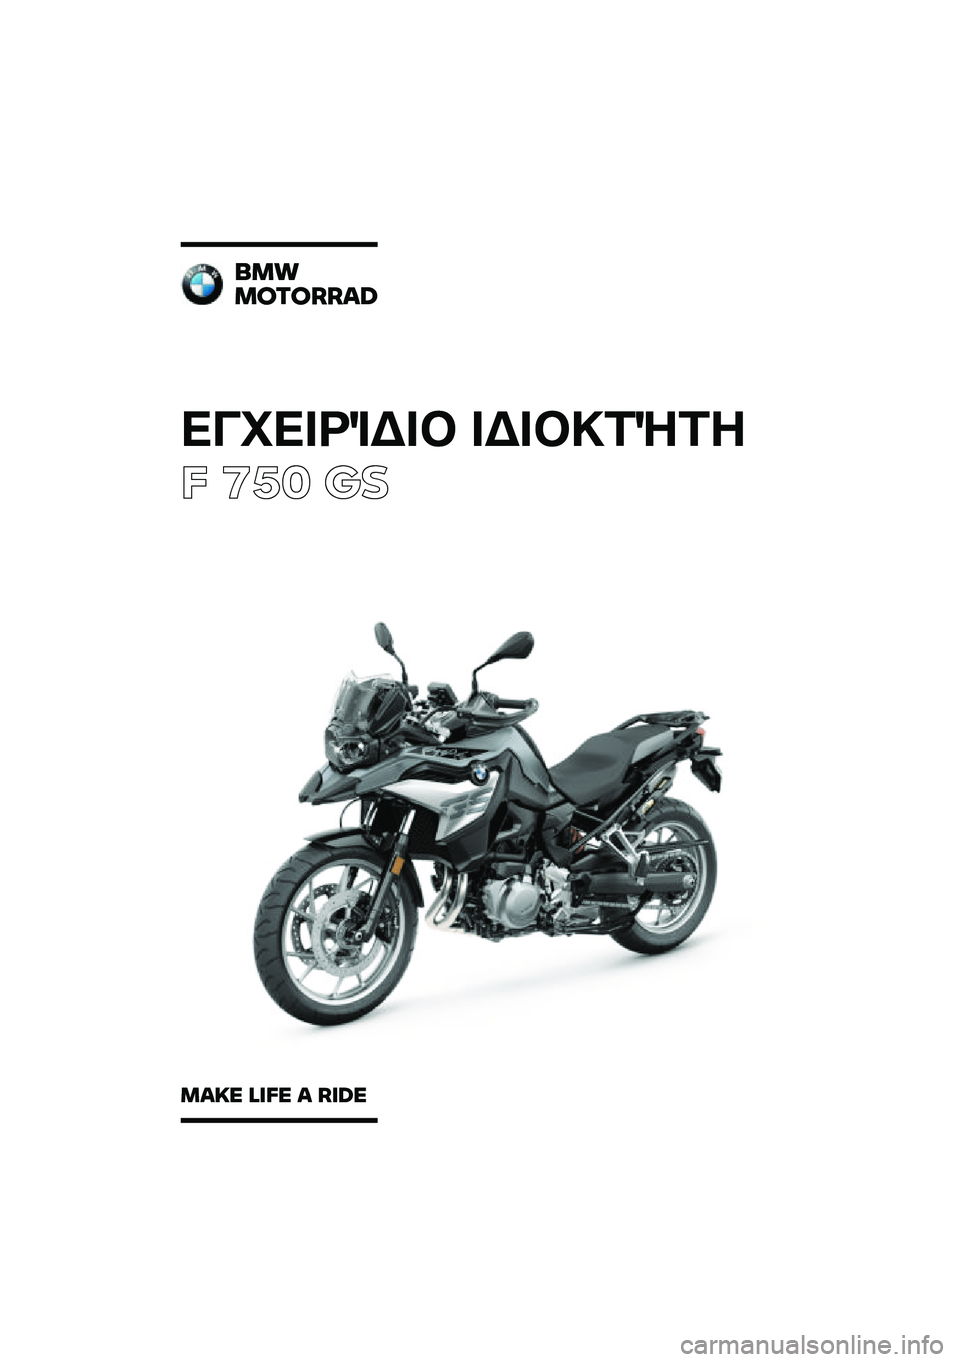 BMW MOTORRAD F 750 GS 2020  Εγχειρίδιο ιδιοκτήτη (in Greek) ��������\b��	 ��\b��	�
��\f��
� ��� �\b�	
���
�������\b�	
��\b�
� �\f�
�� �\b ��
�	� 